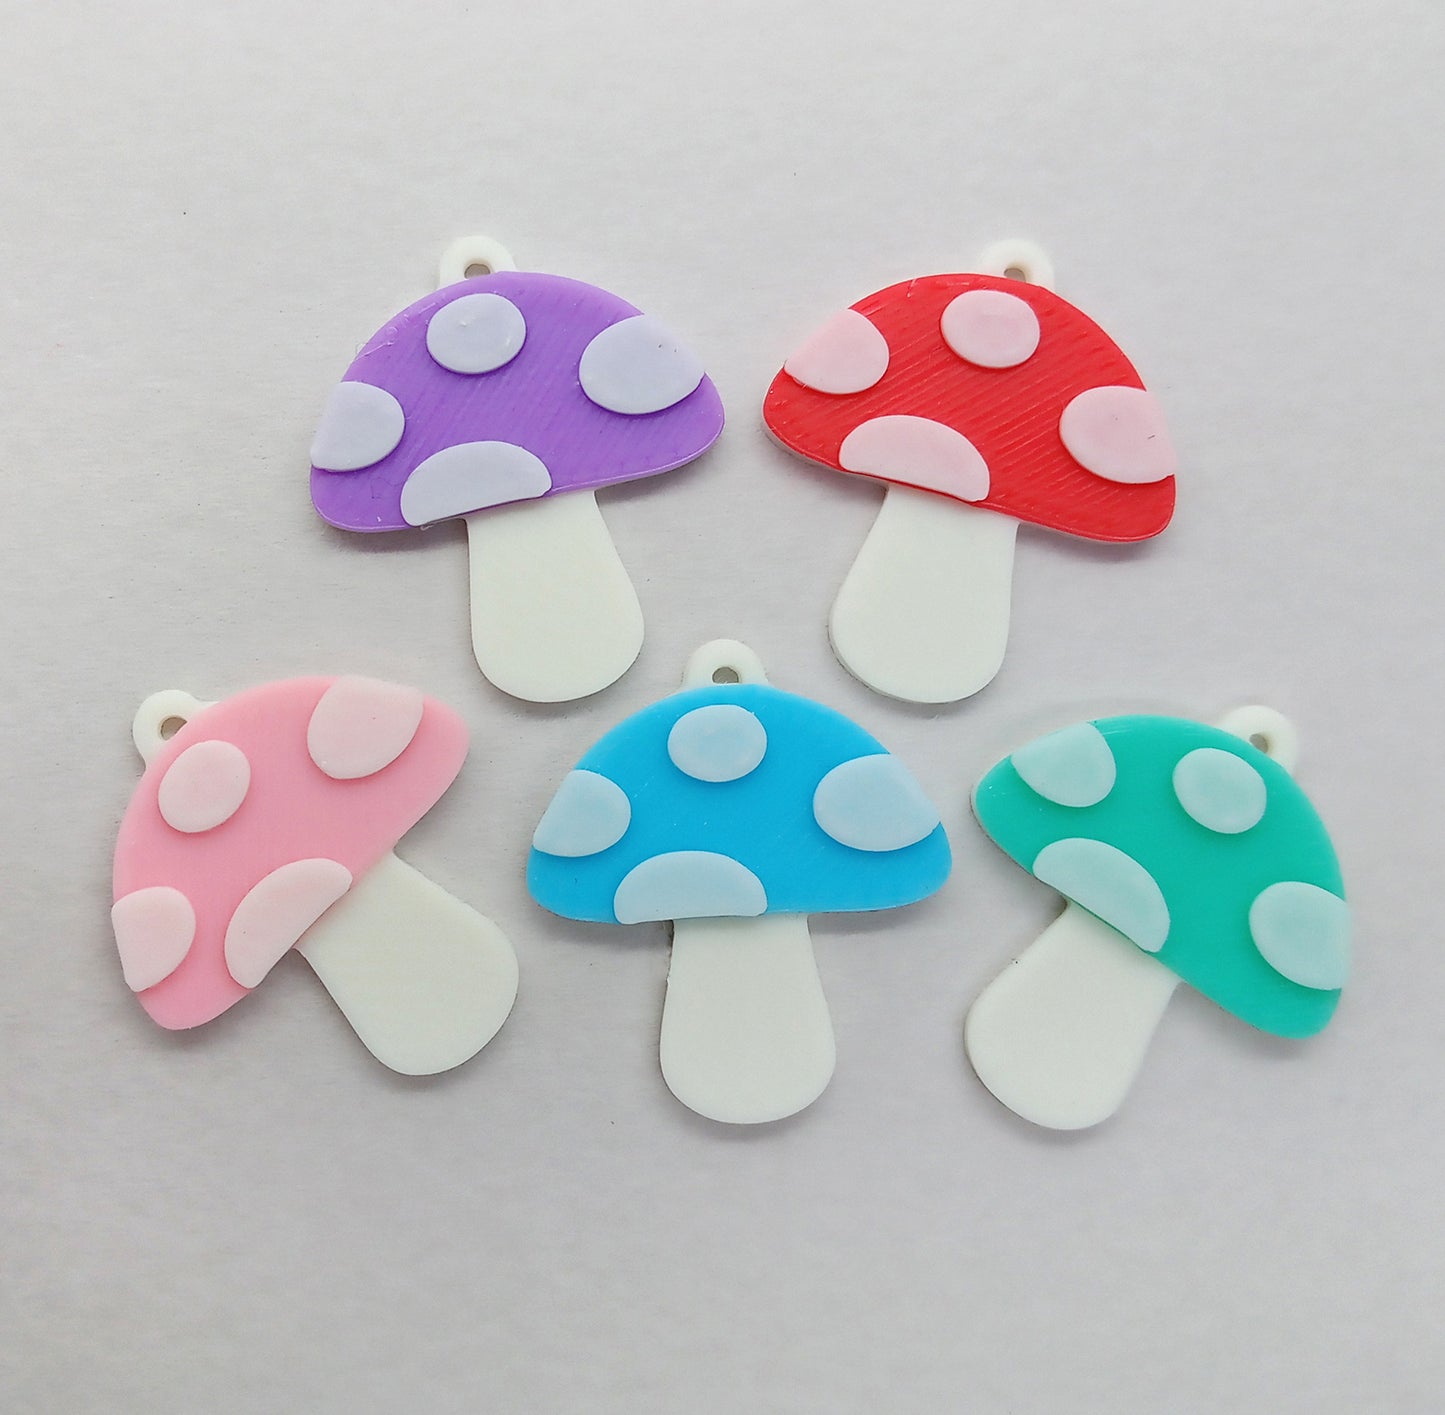 10 Cute Mushroom Charms, One Pair of Each Color